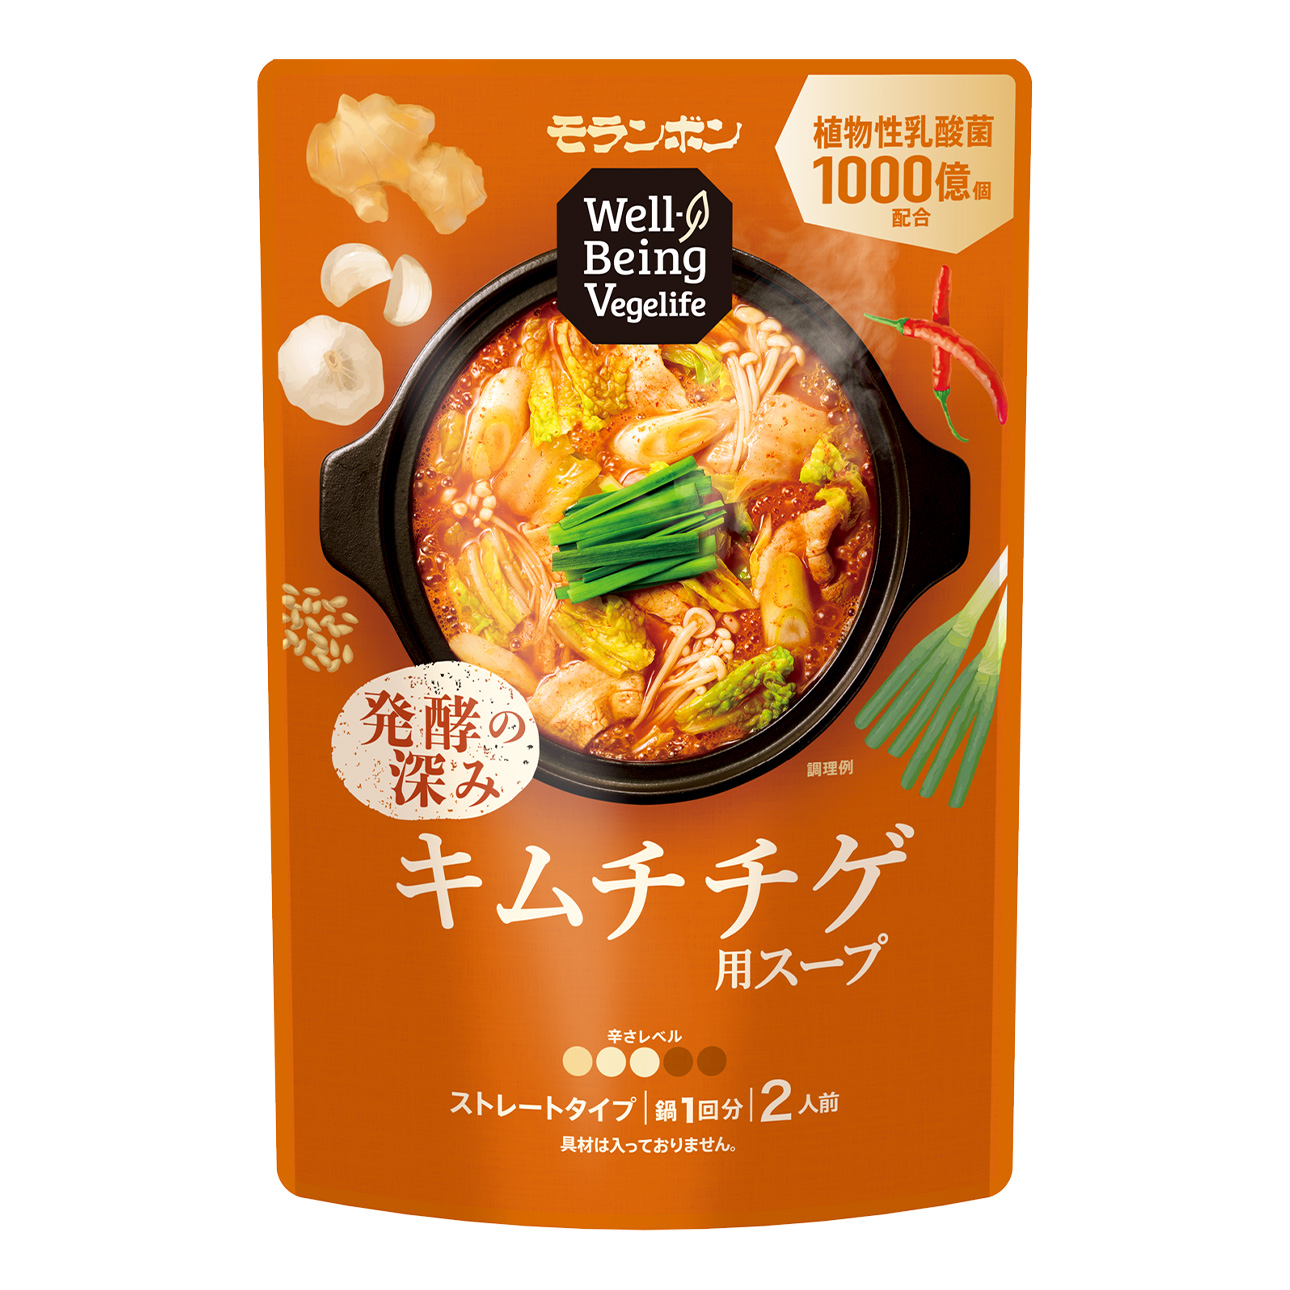 Well-Being Vegelife キムチチゲ用スープ